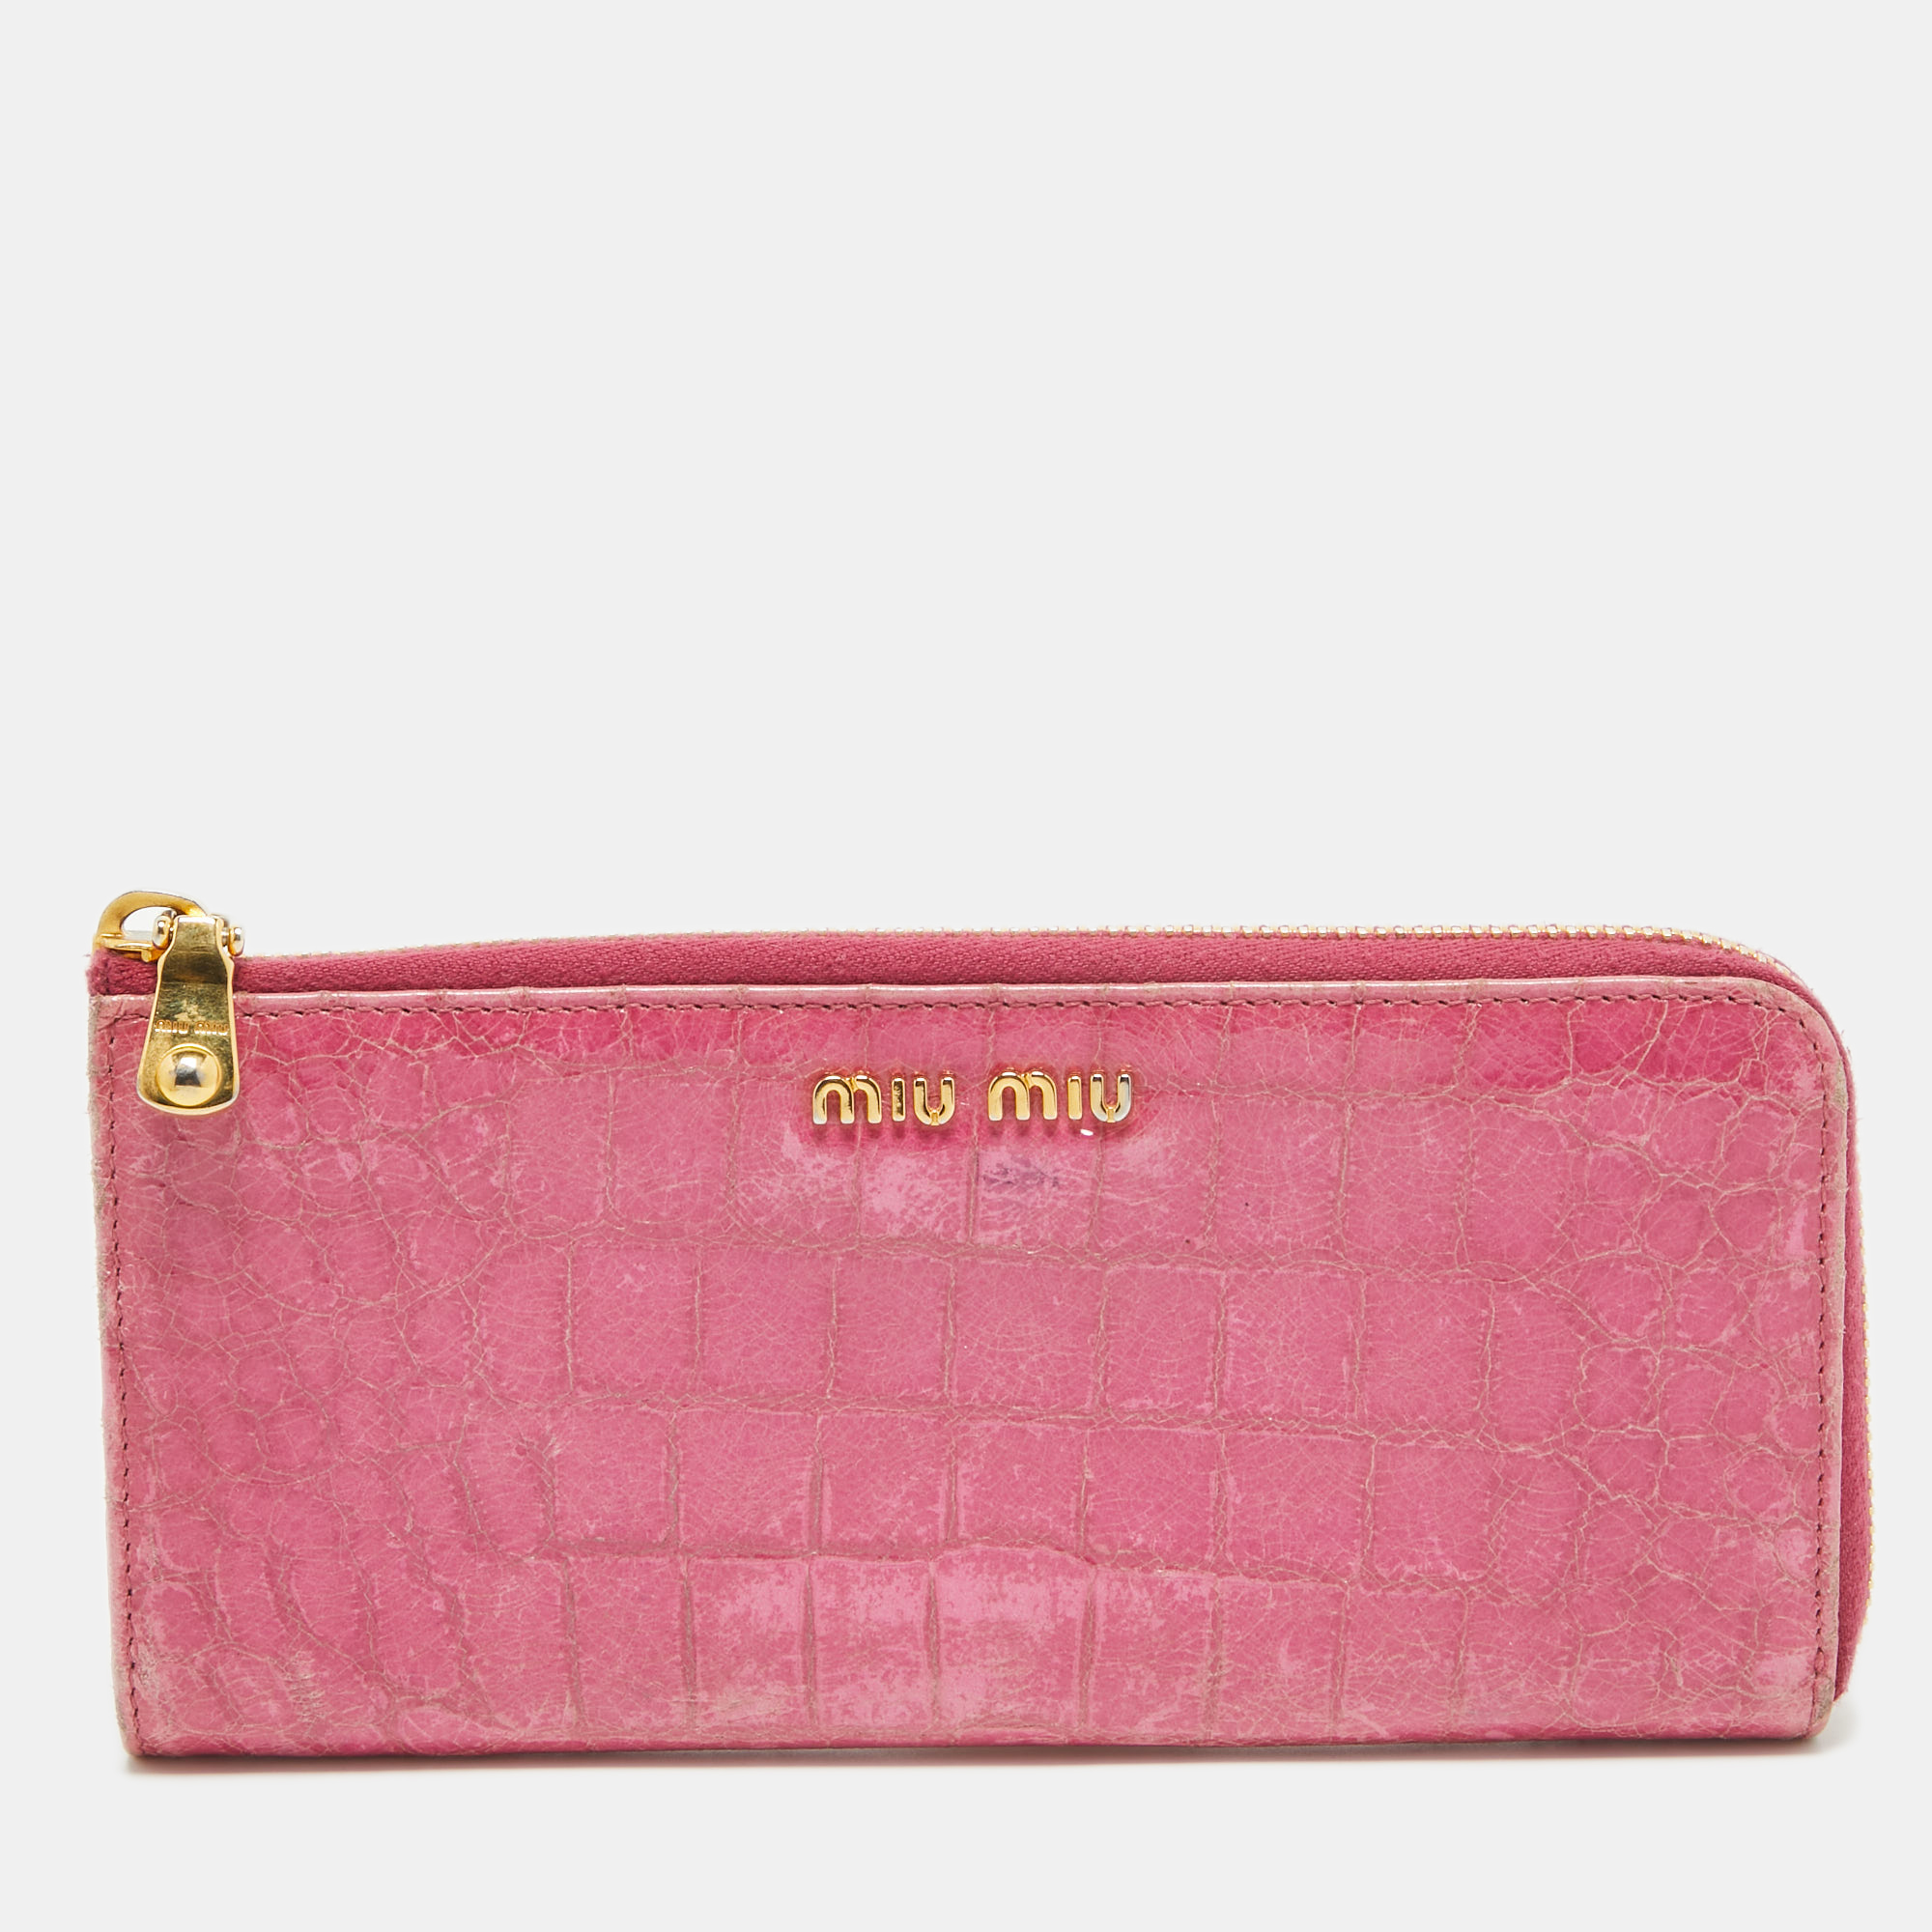 Miu miu pink croc effect patent leather continental zip wallet